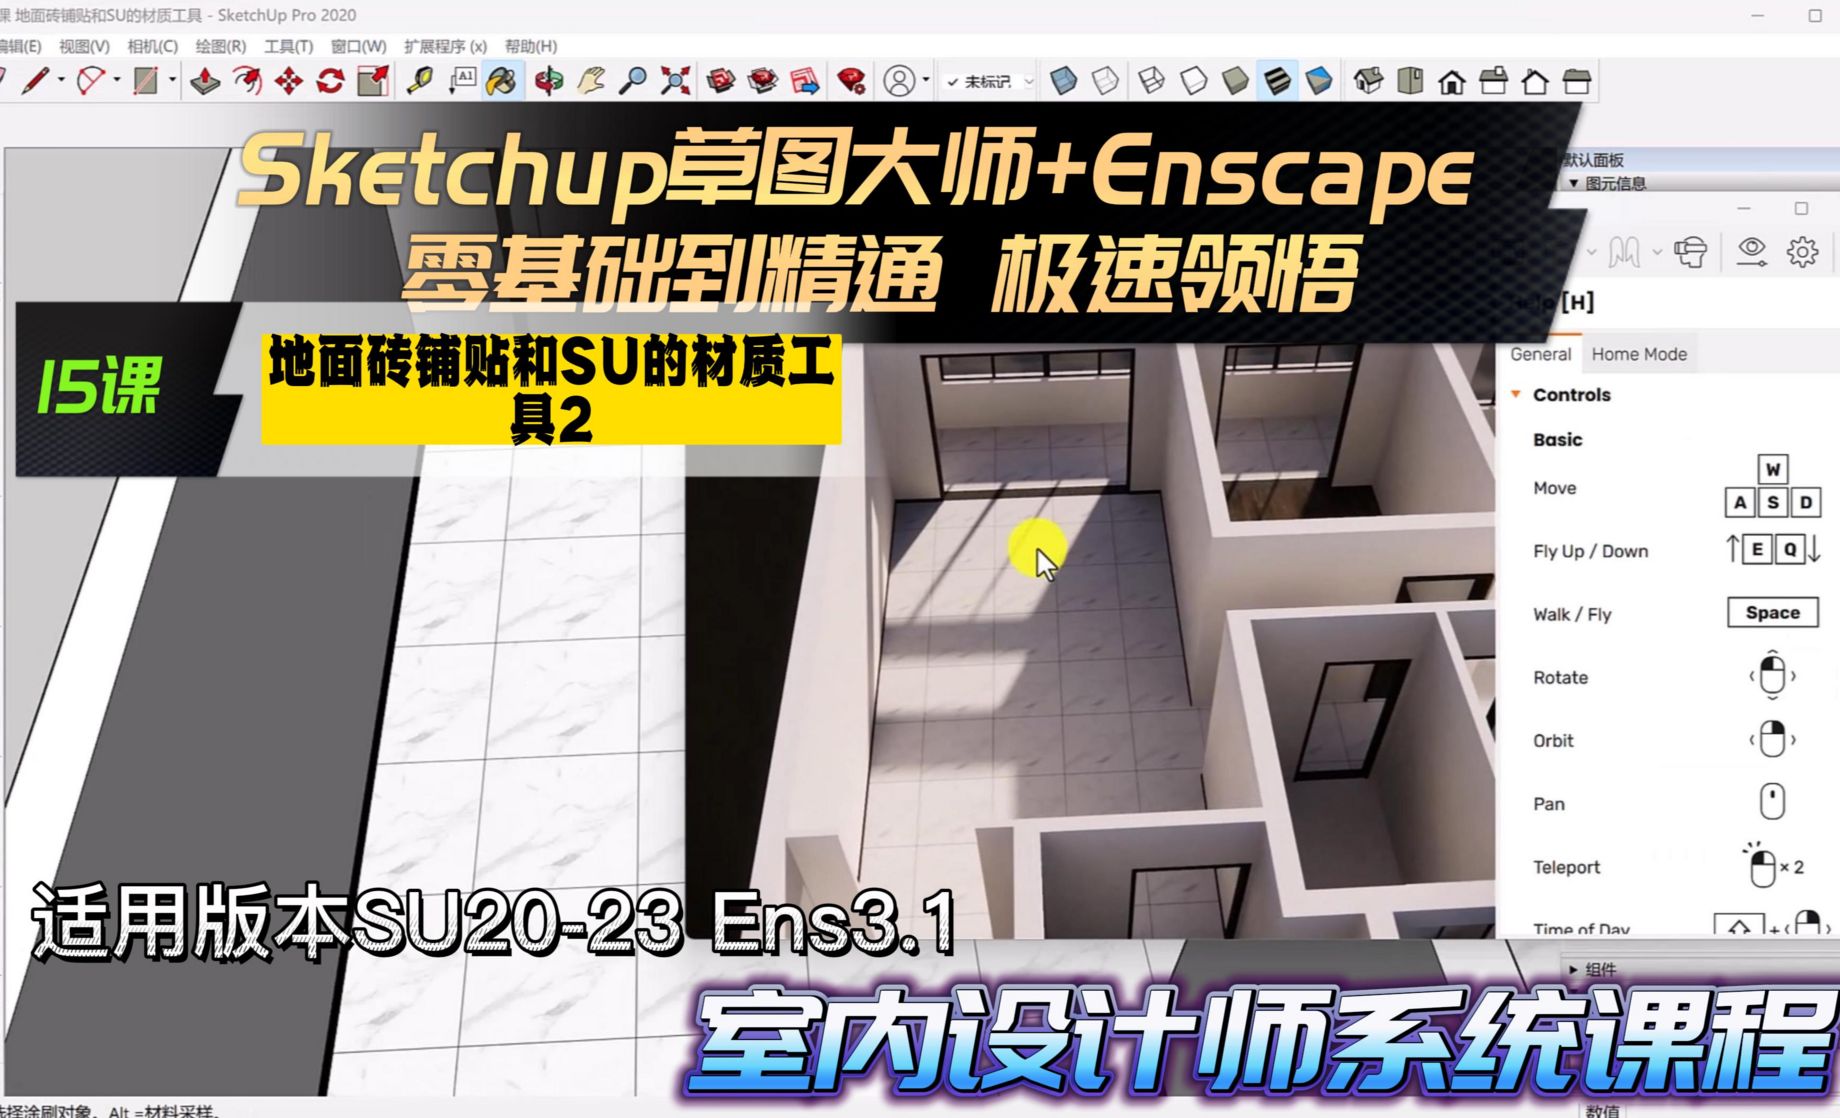 Sketchup+Enscape室内设计极速领悟-地面砖铺贴和SU的材质工具2